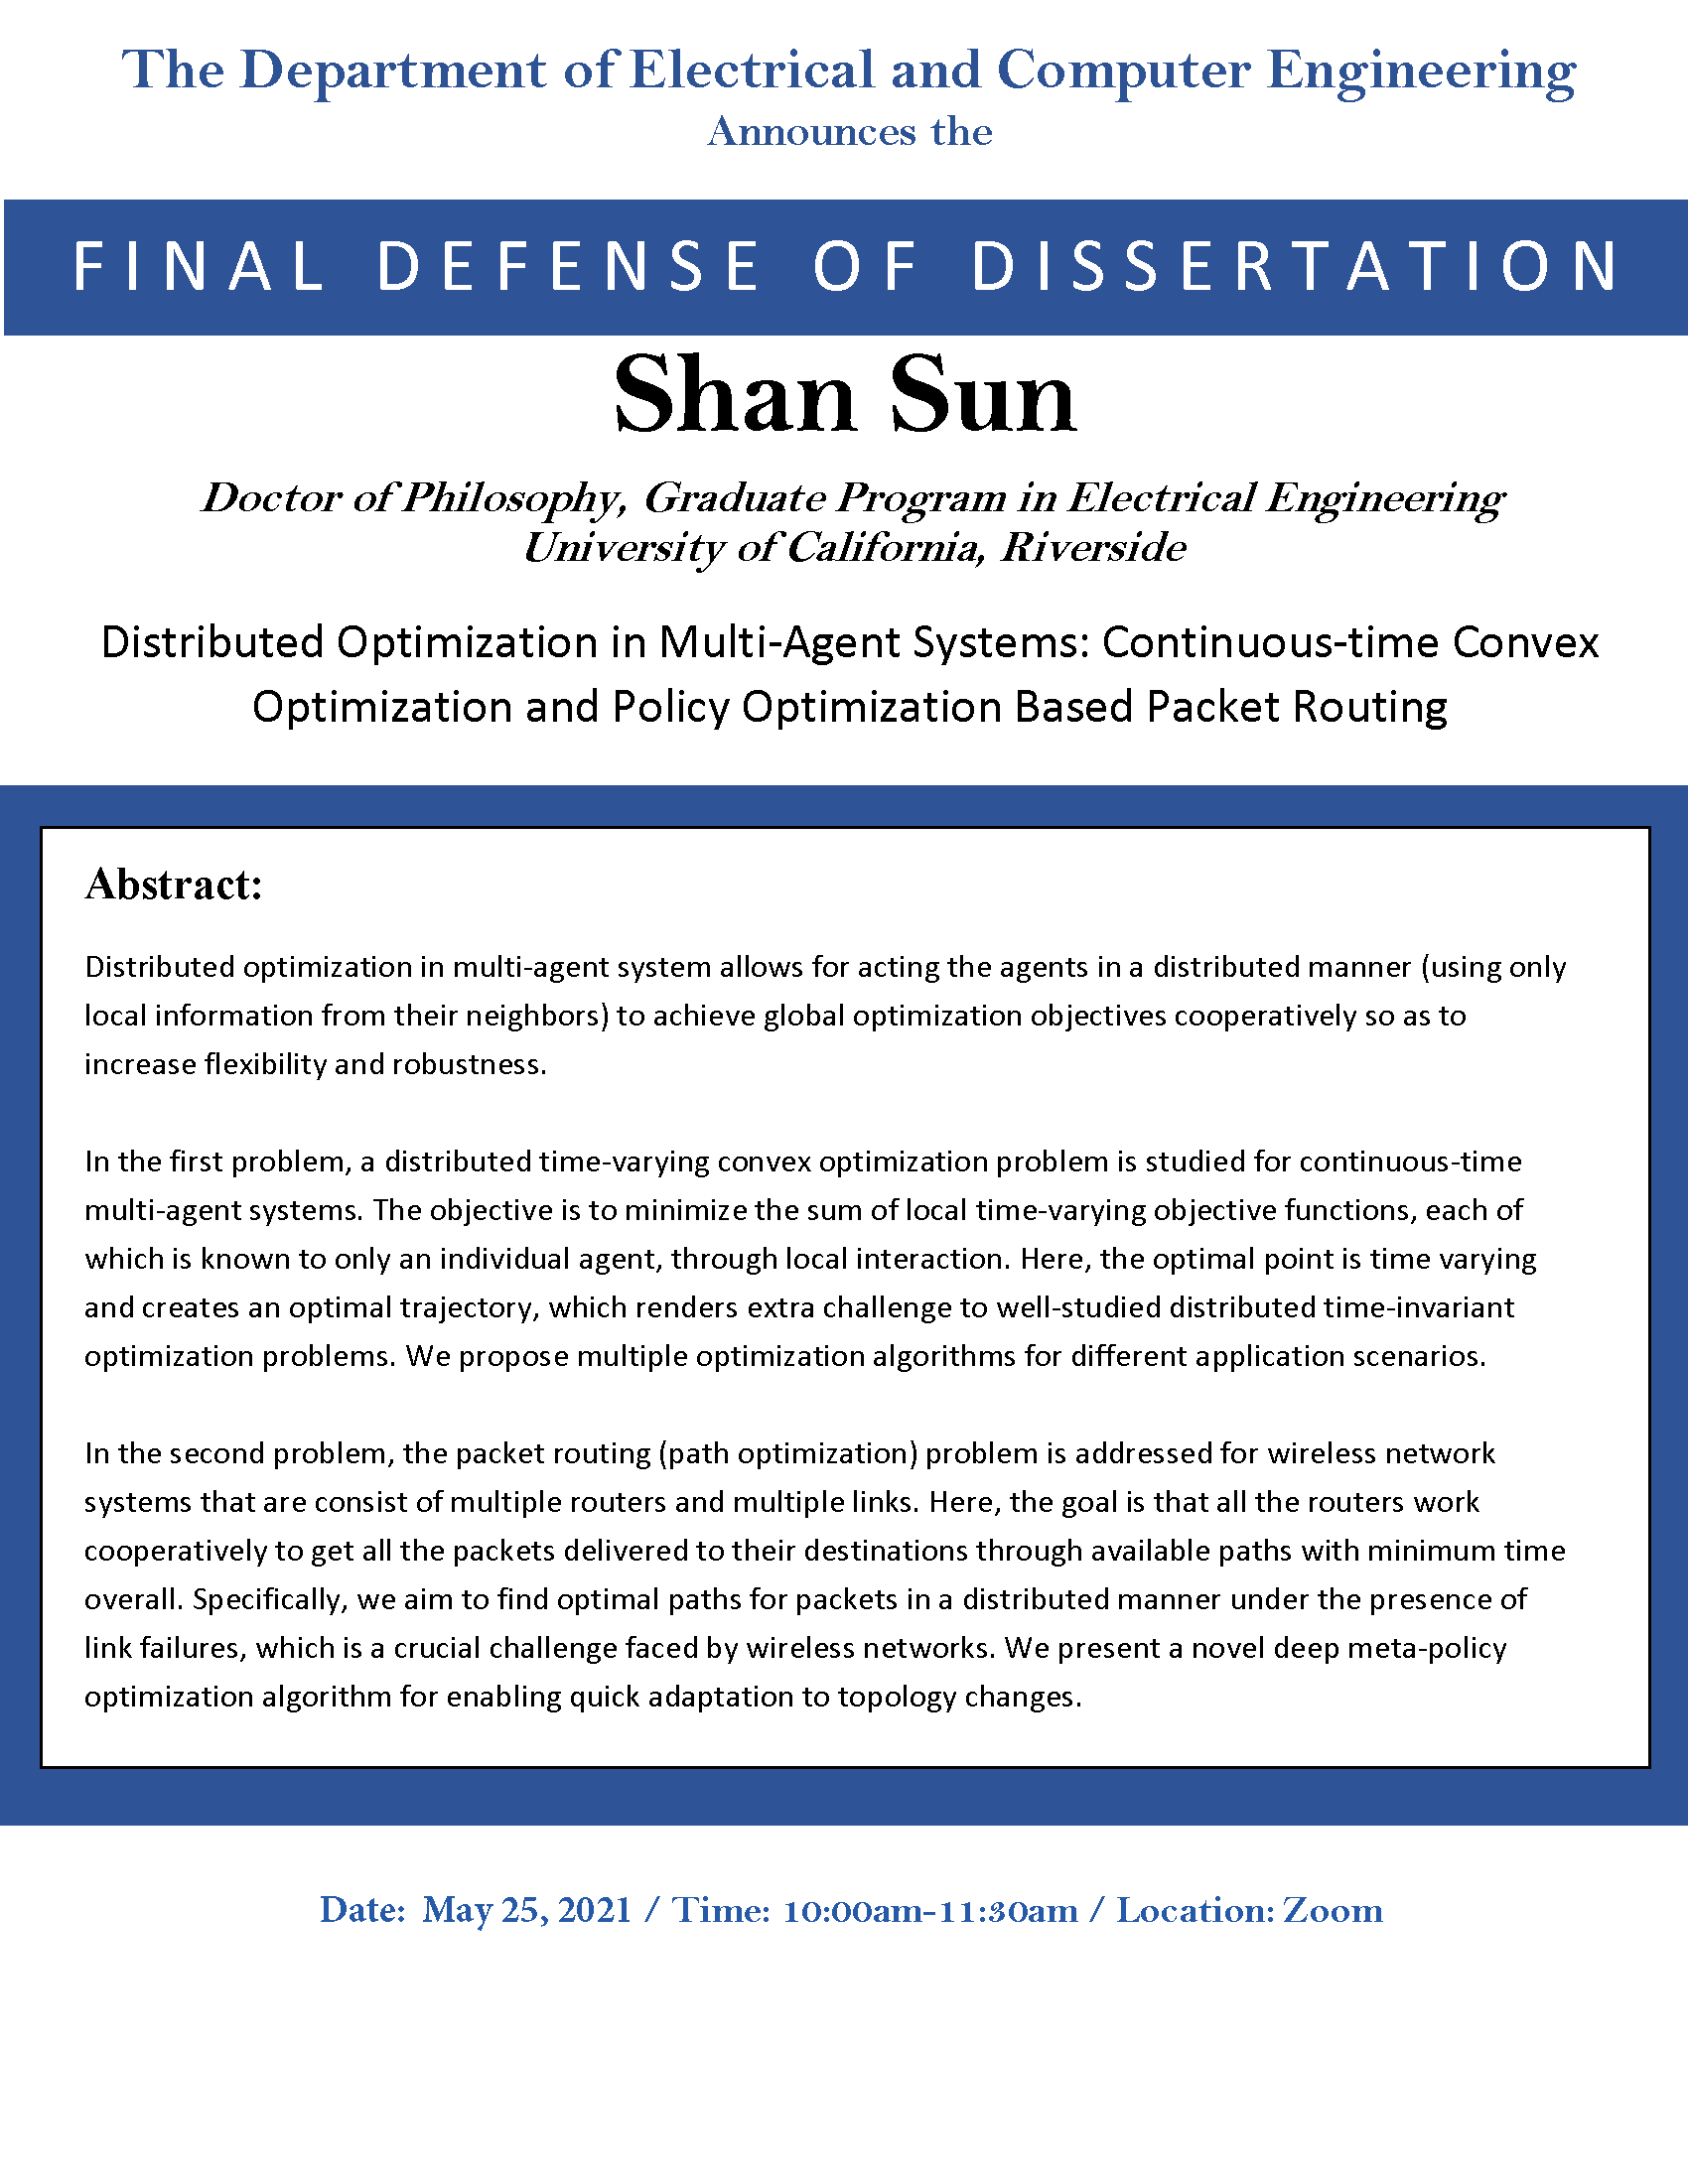 Final Defense of Dissertation: Shan Sun (5) 